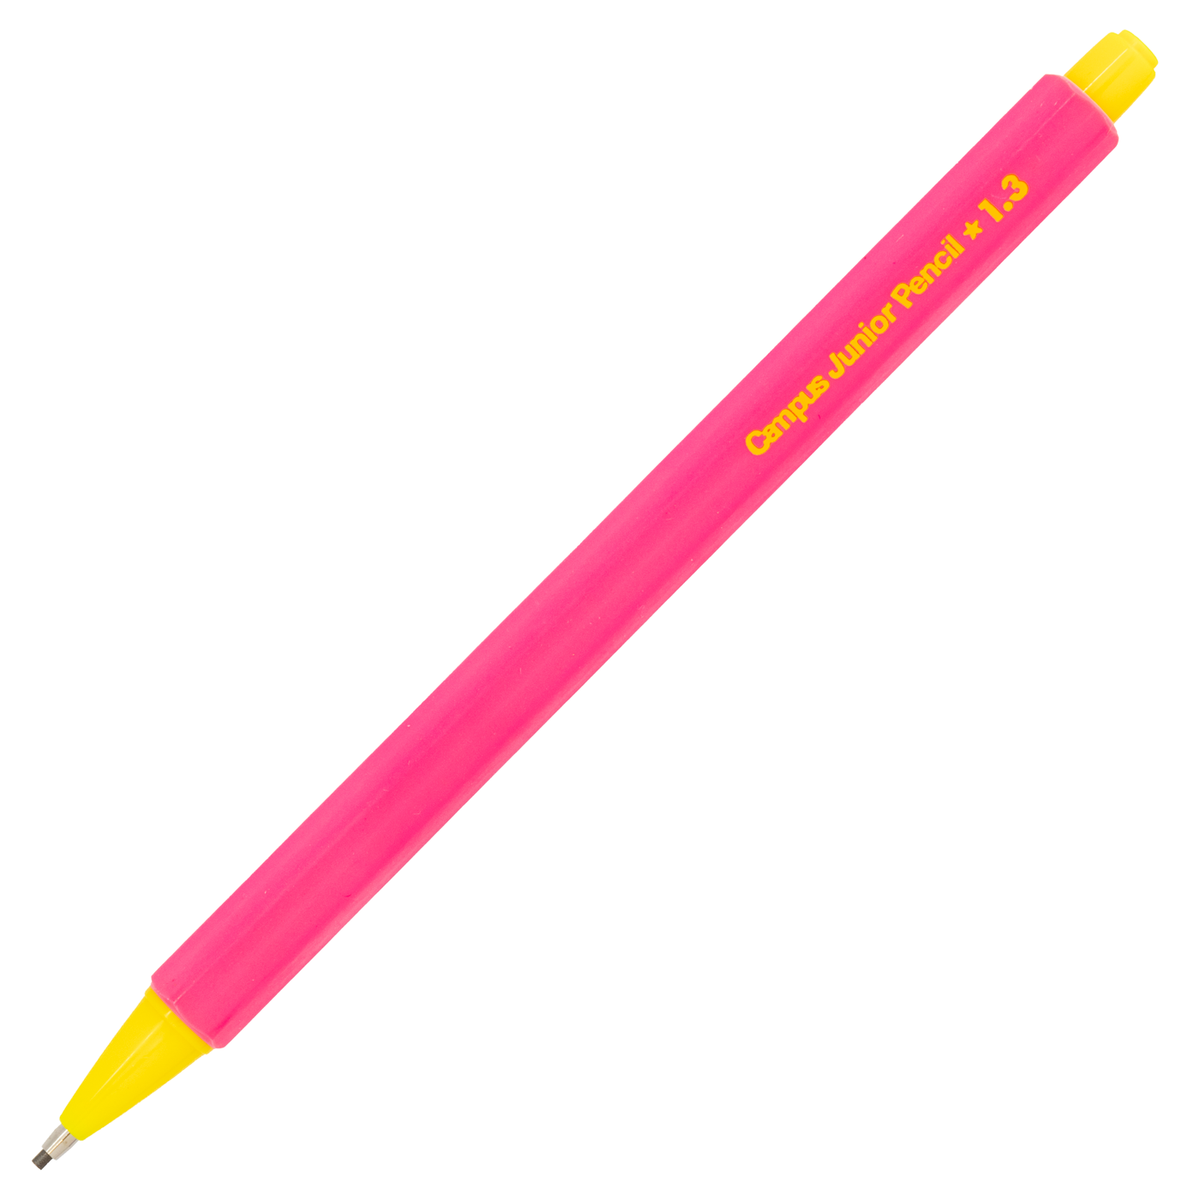 Kokuyo Campus Junior Pencil 1.3mm - Pink